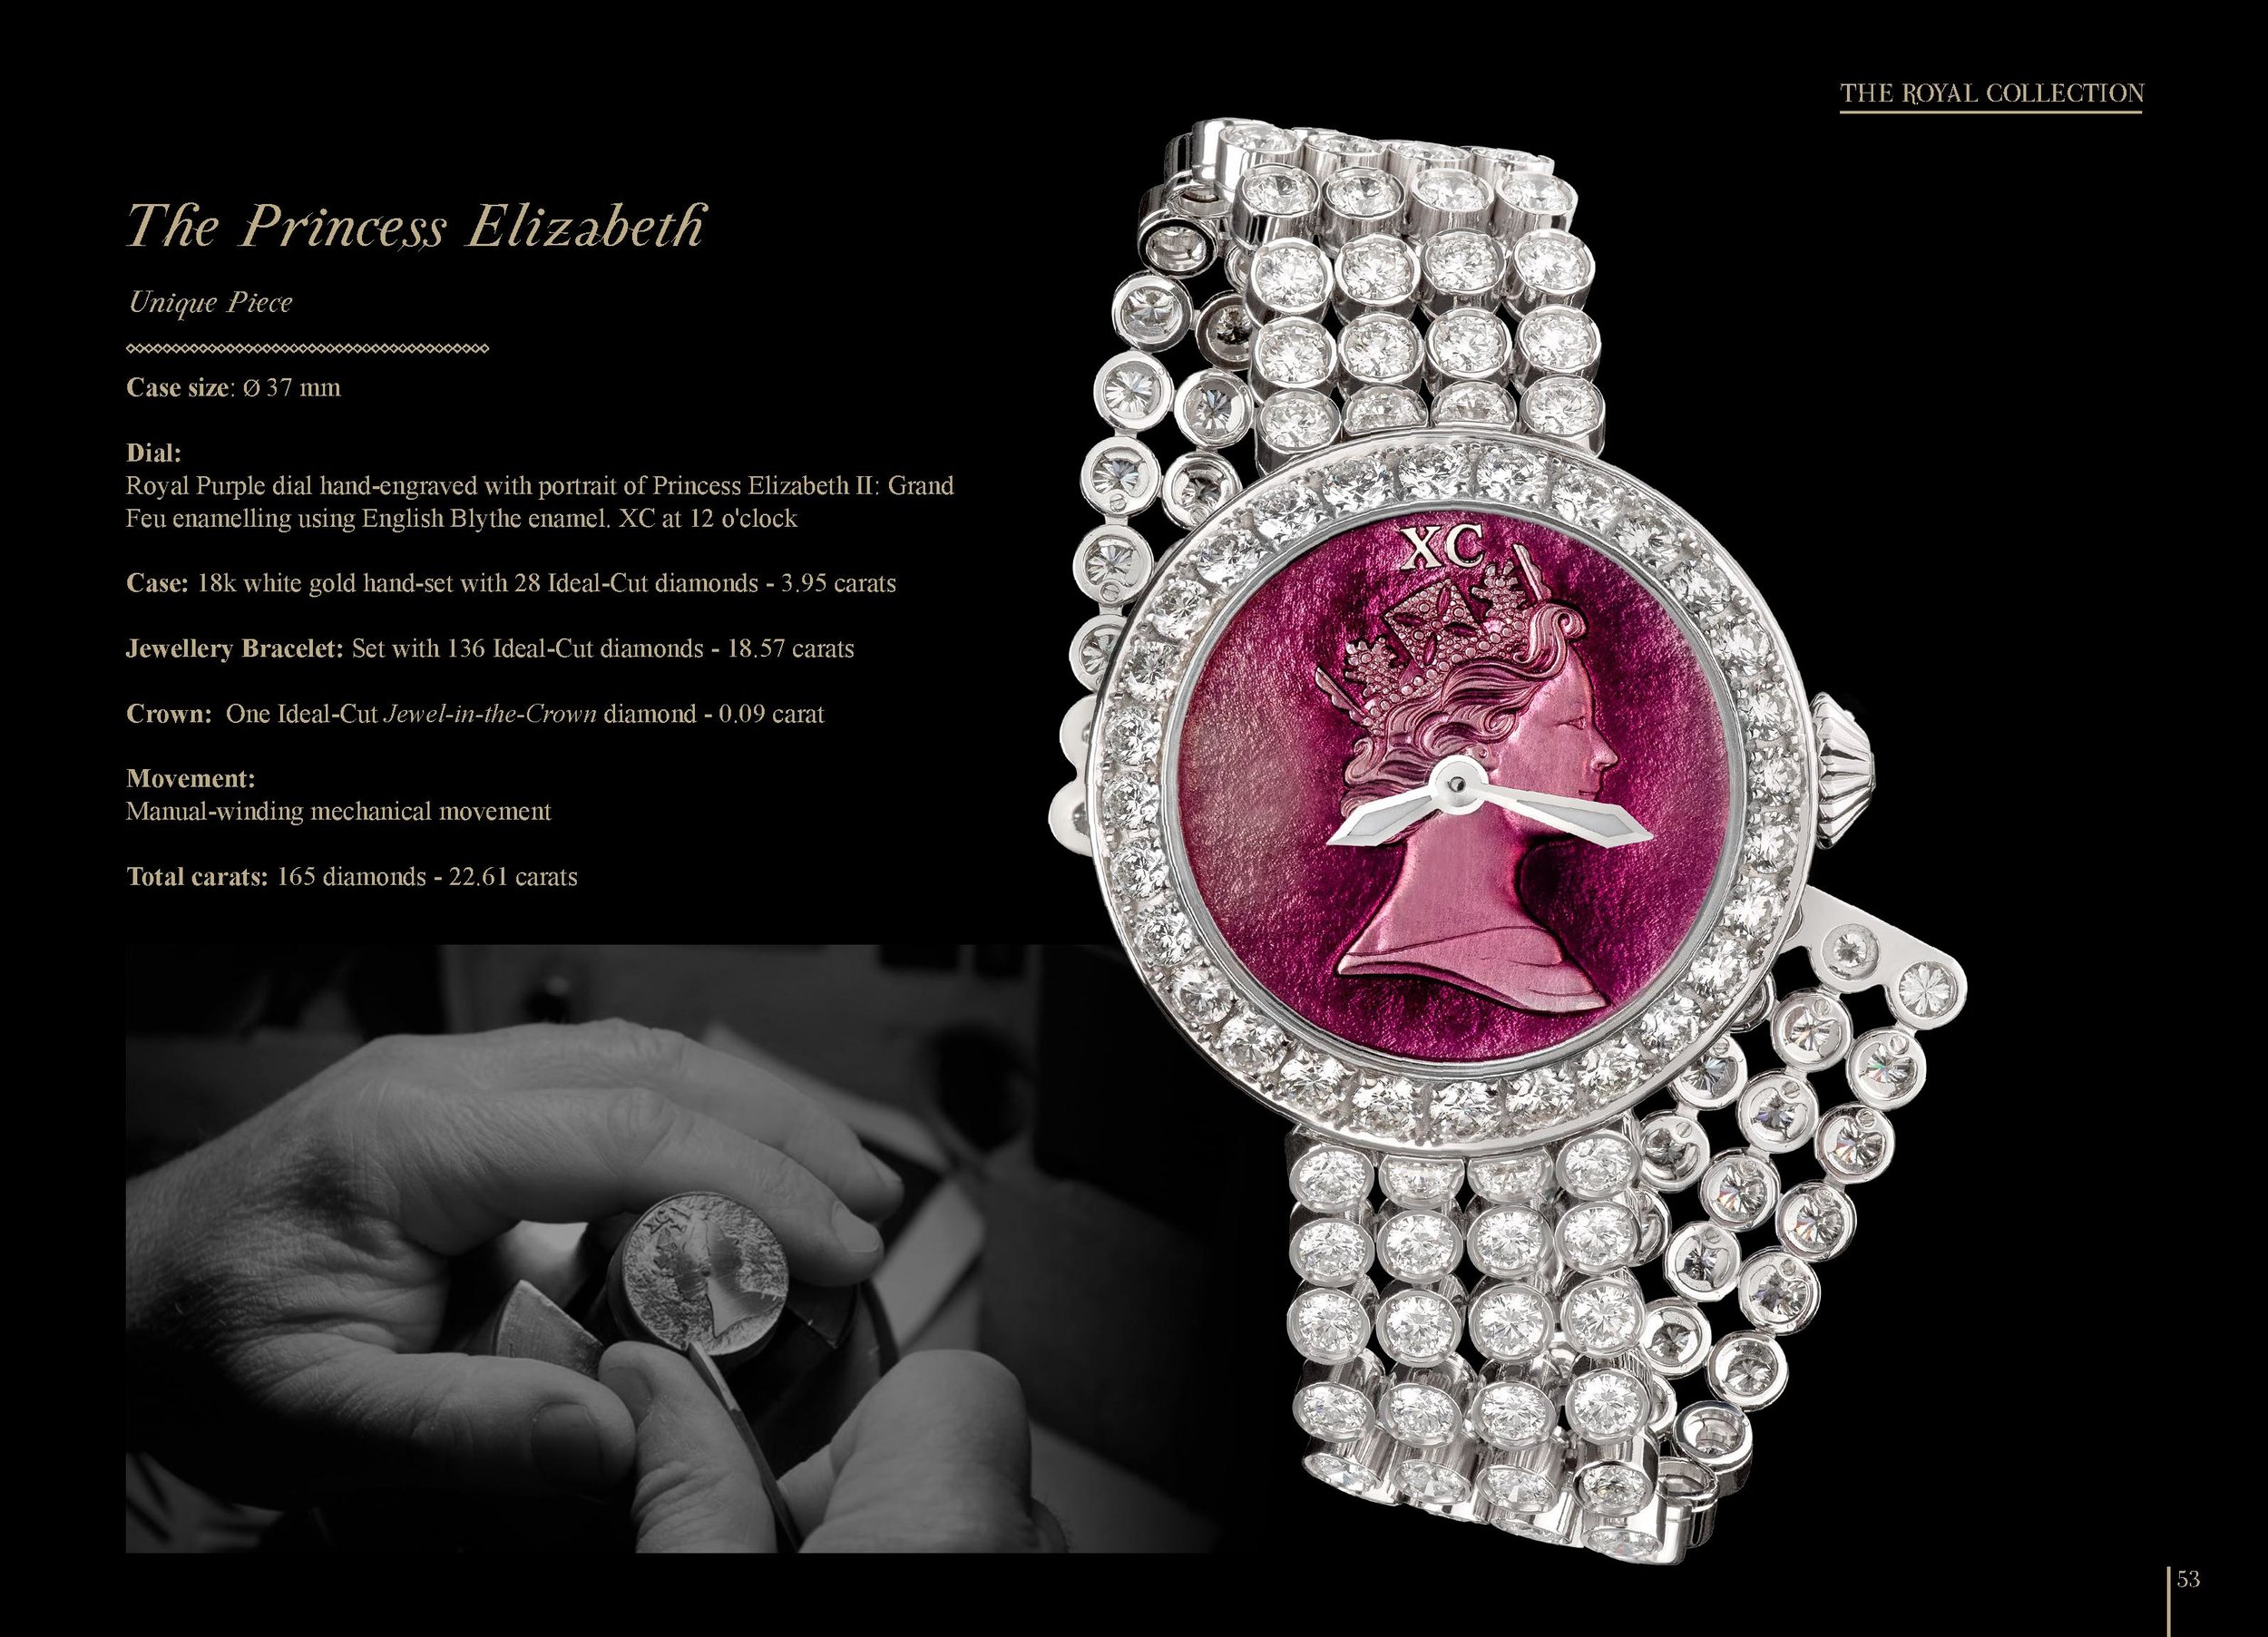 The Princess Elizabeth iconic diamond watch